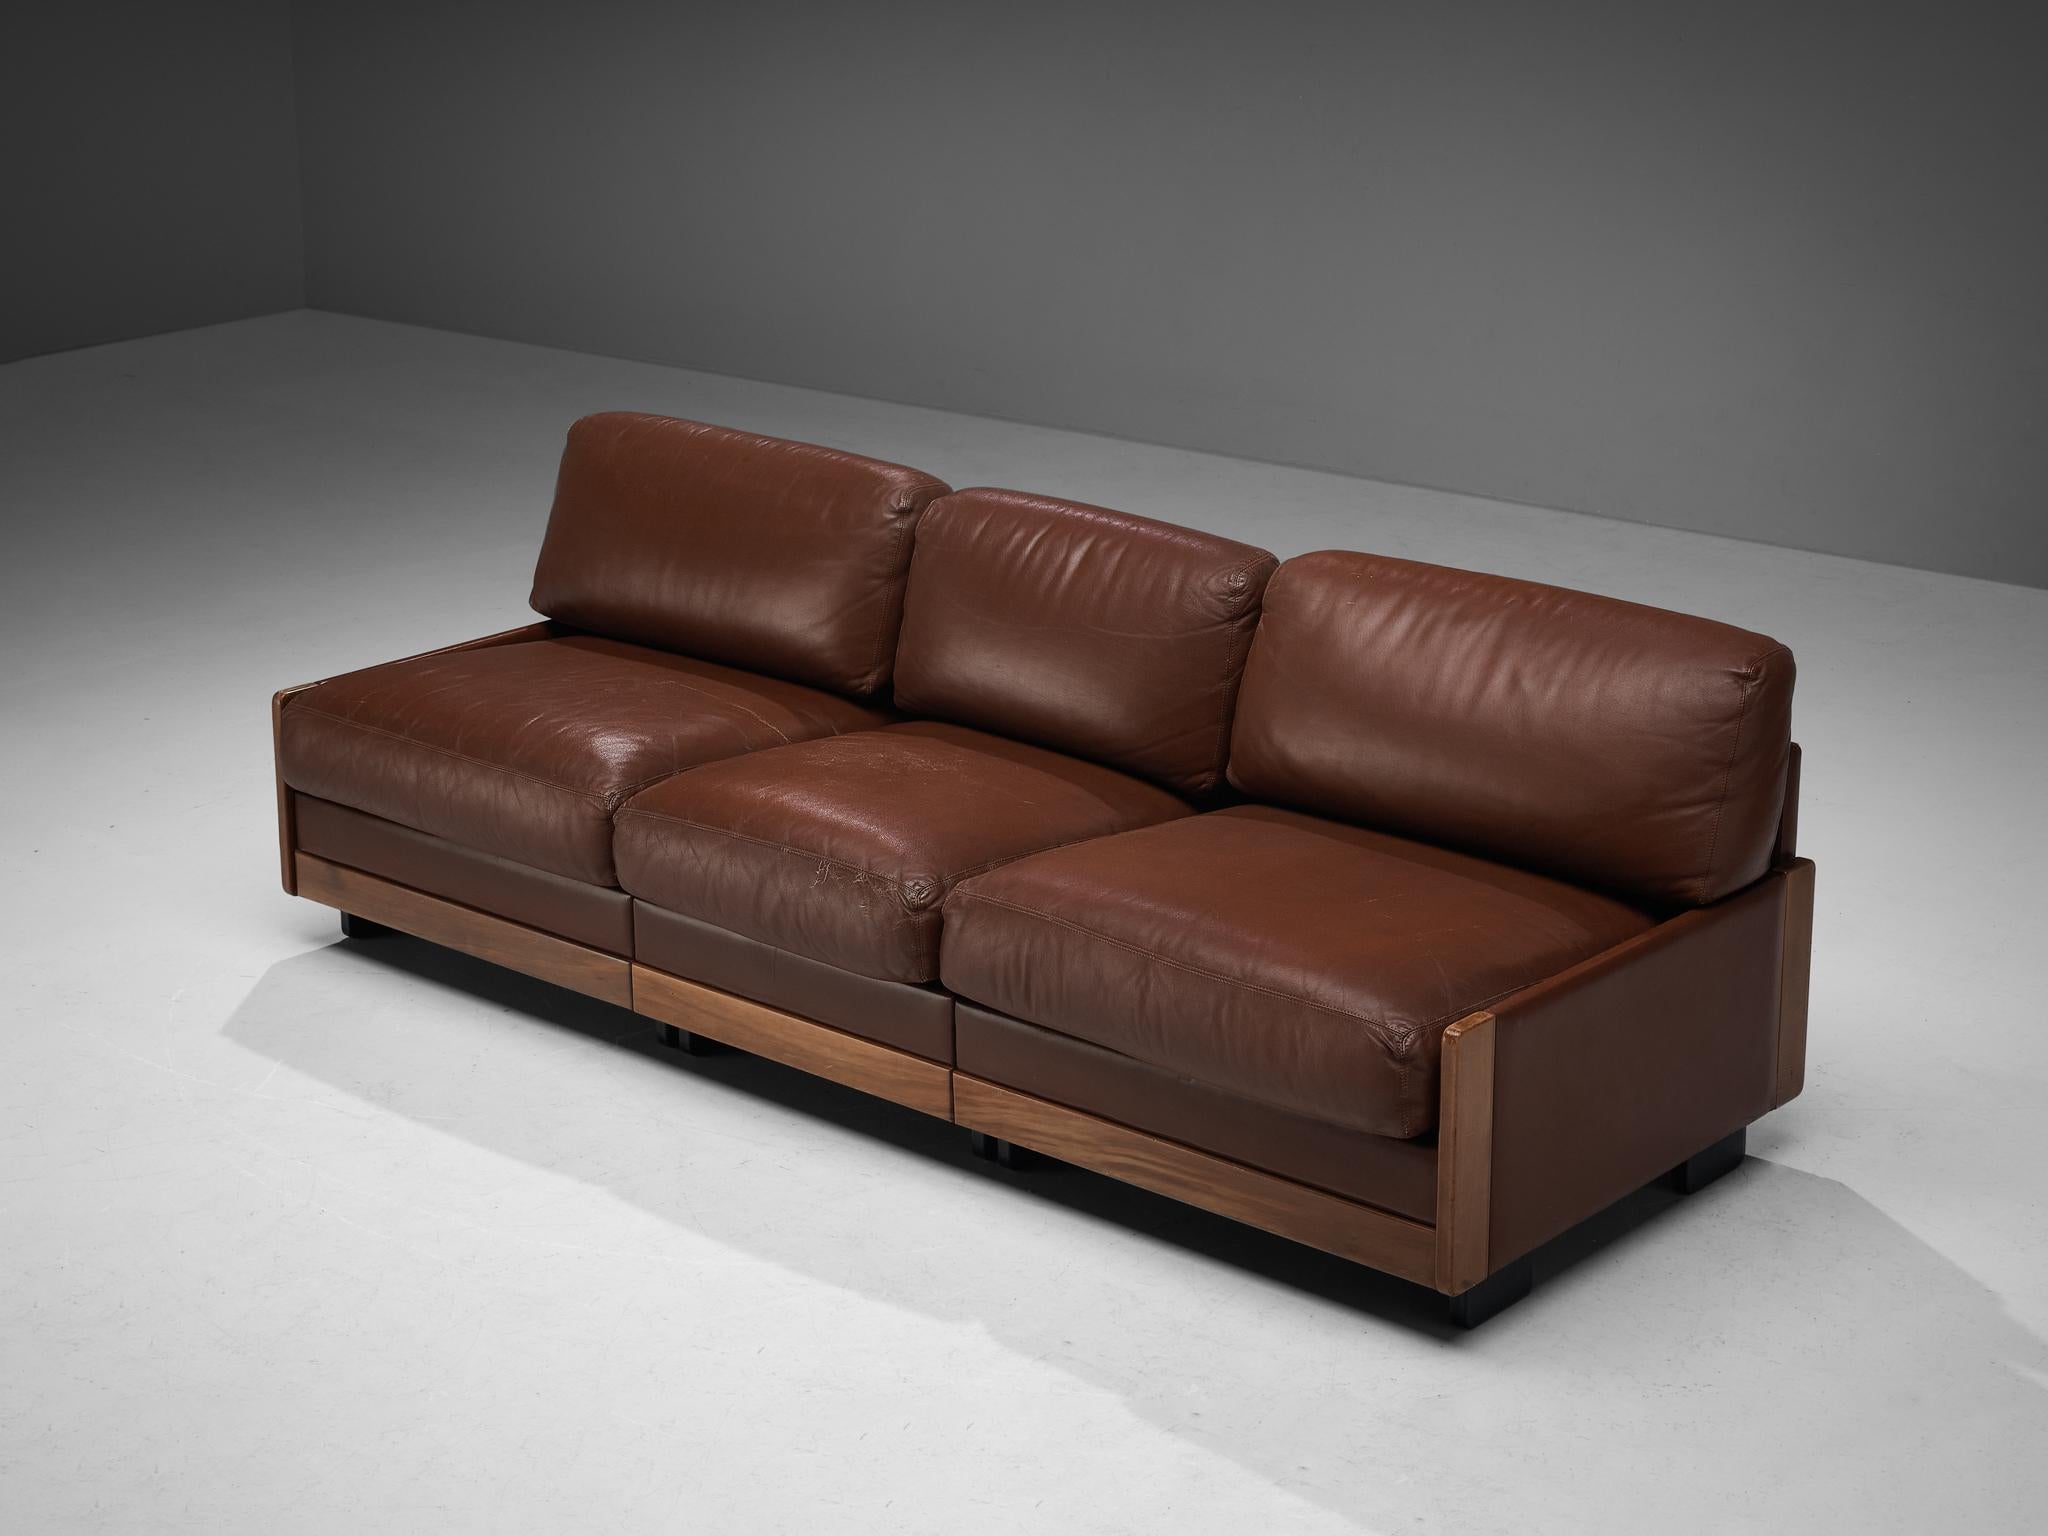 Afra & Tobia Scarpa für Cassina, dreisitziges Sofa, Modell 